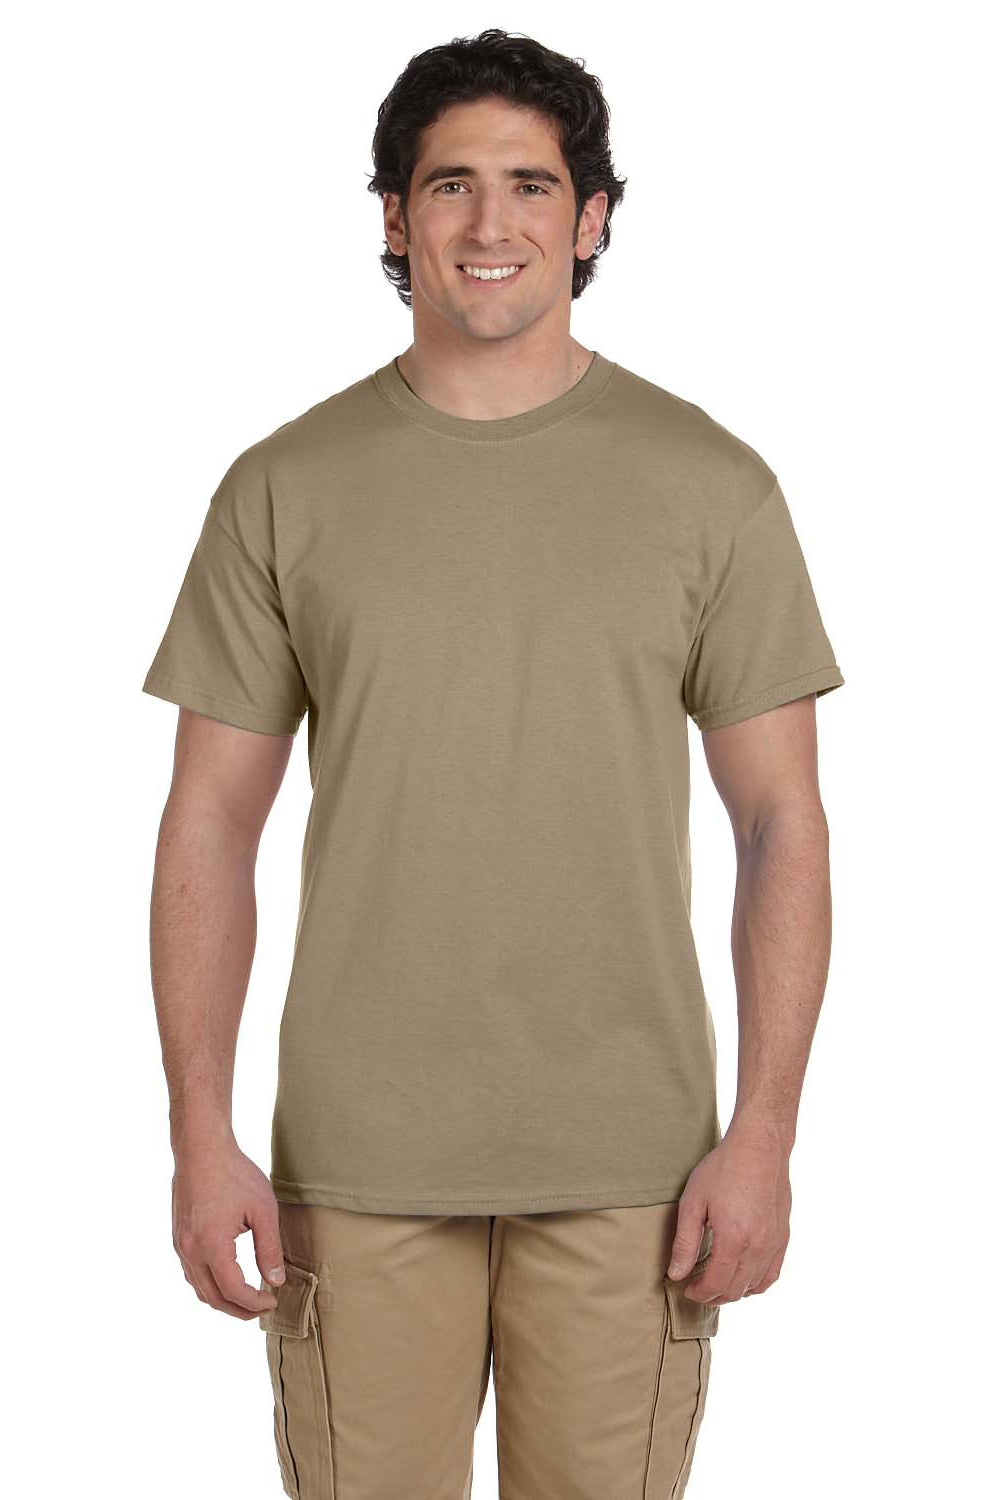 Fruit Of The Loom 3931 Mens HD Jersey Short Sleeve Crewneck T-Shirt Khaki Brown Front